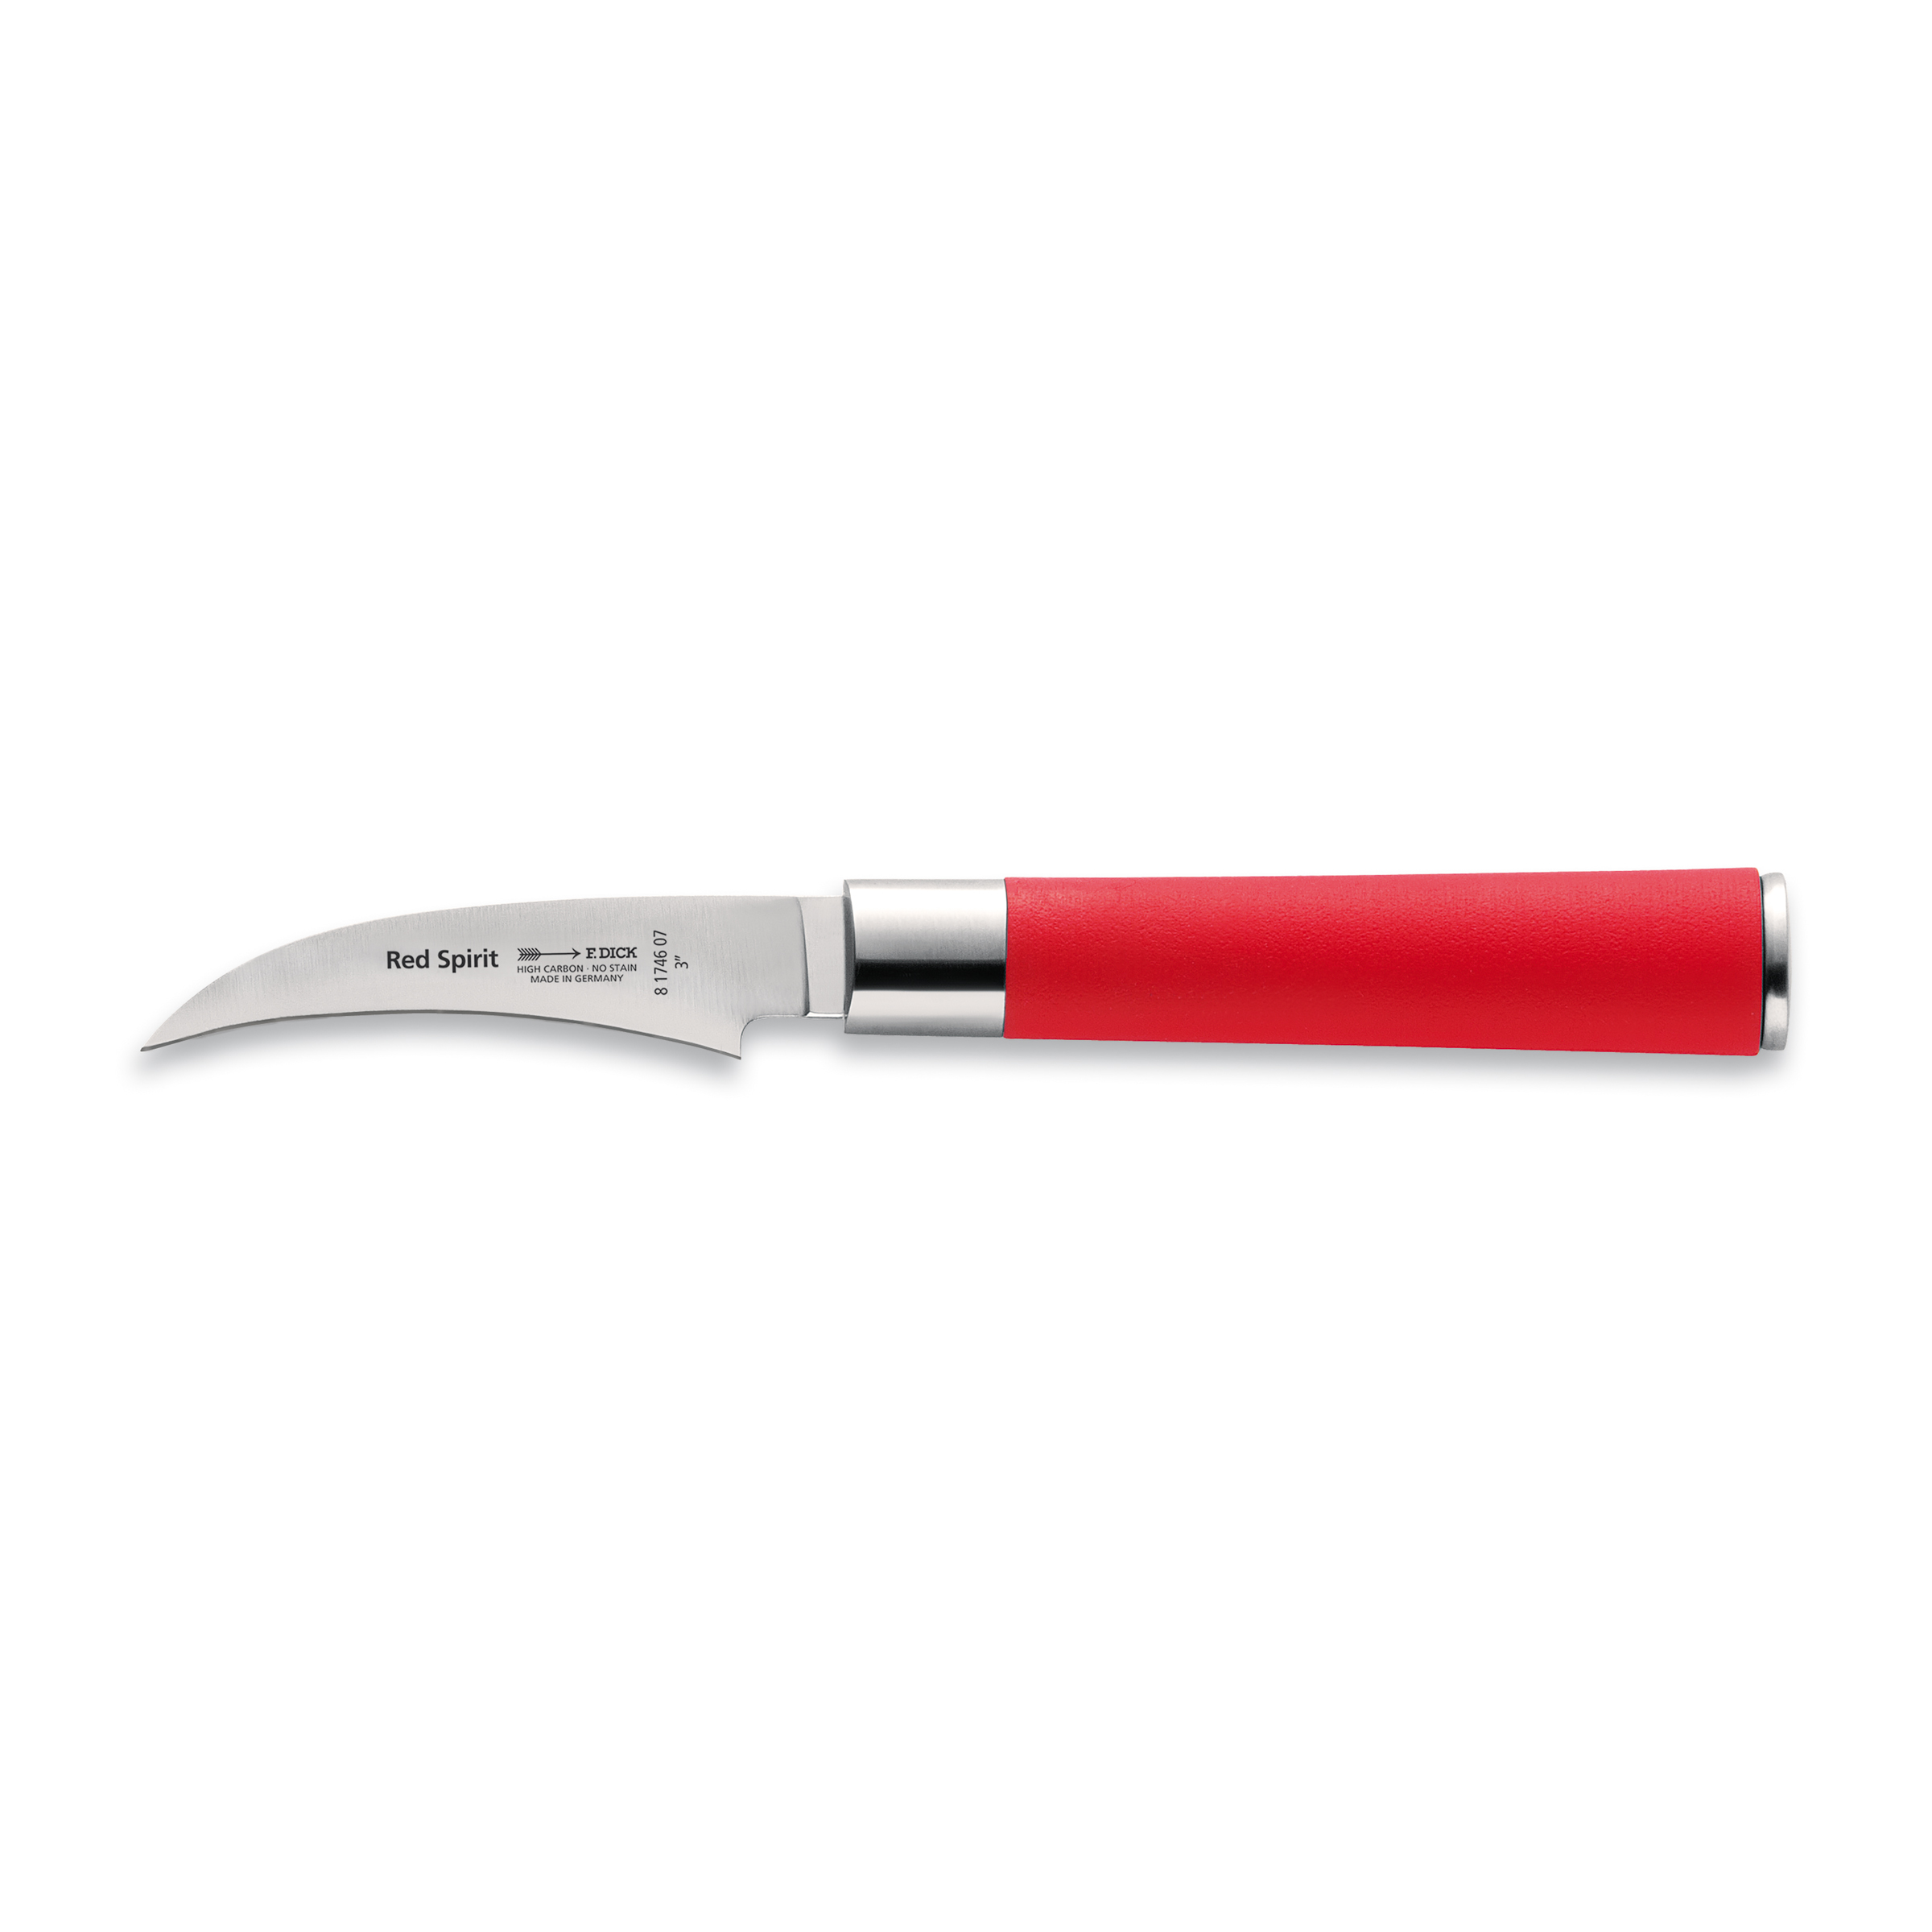 Dick® Red Spirit Tourniermesser, 7 cm (8174607)